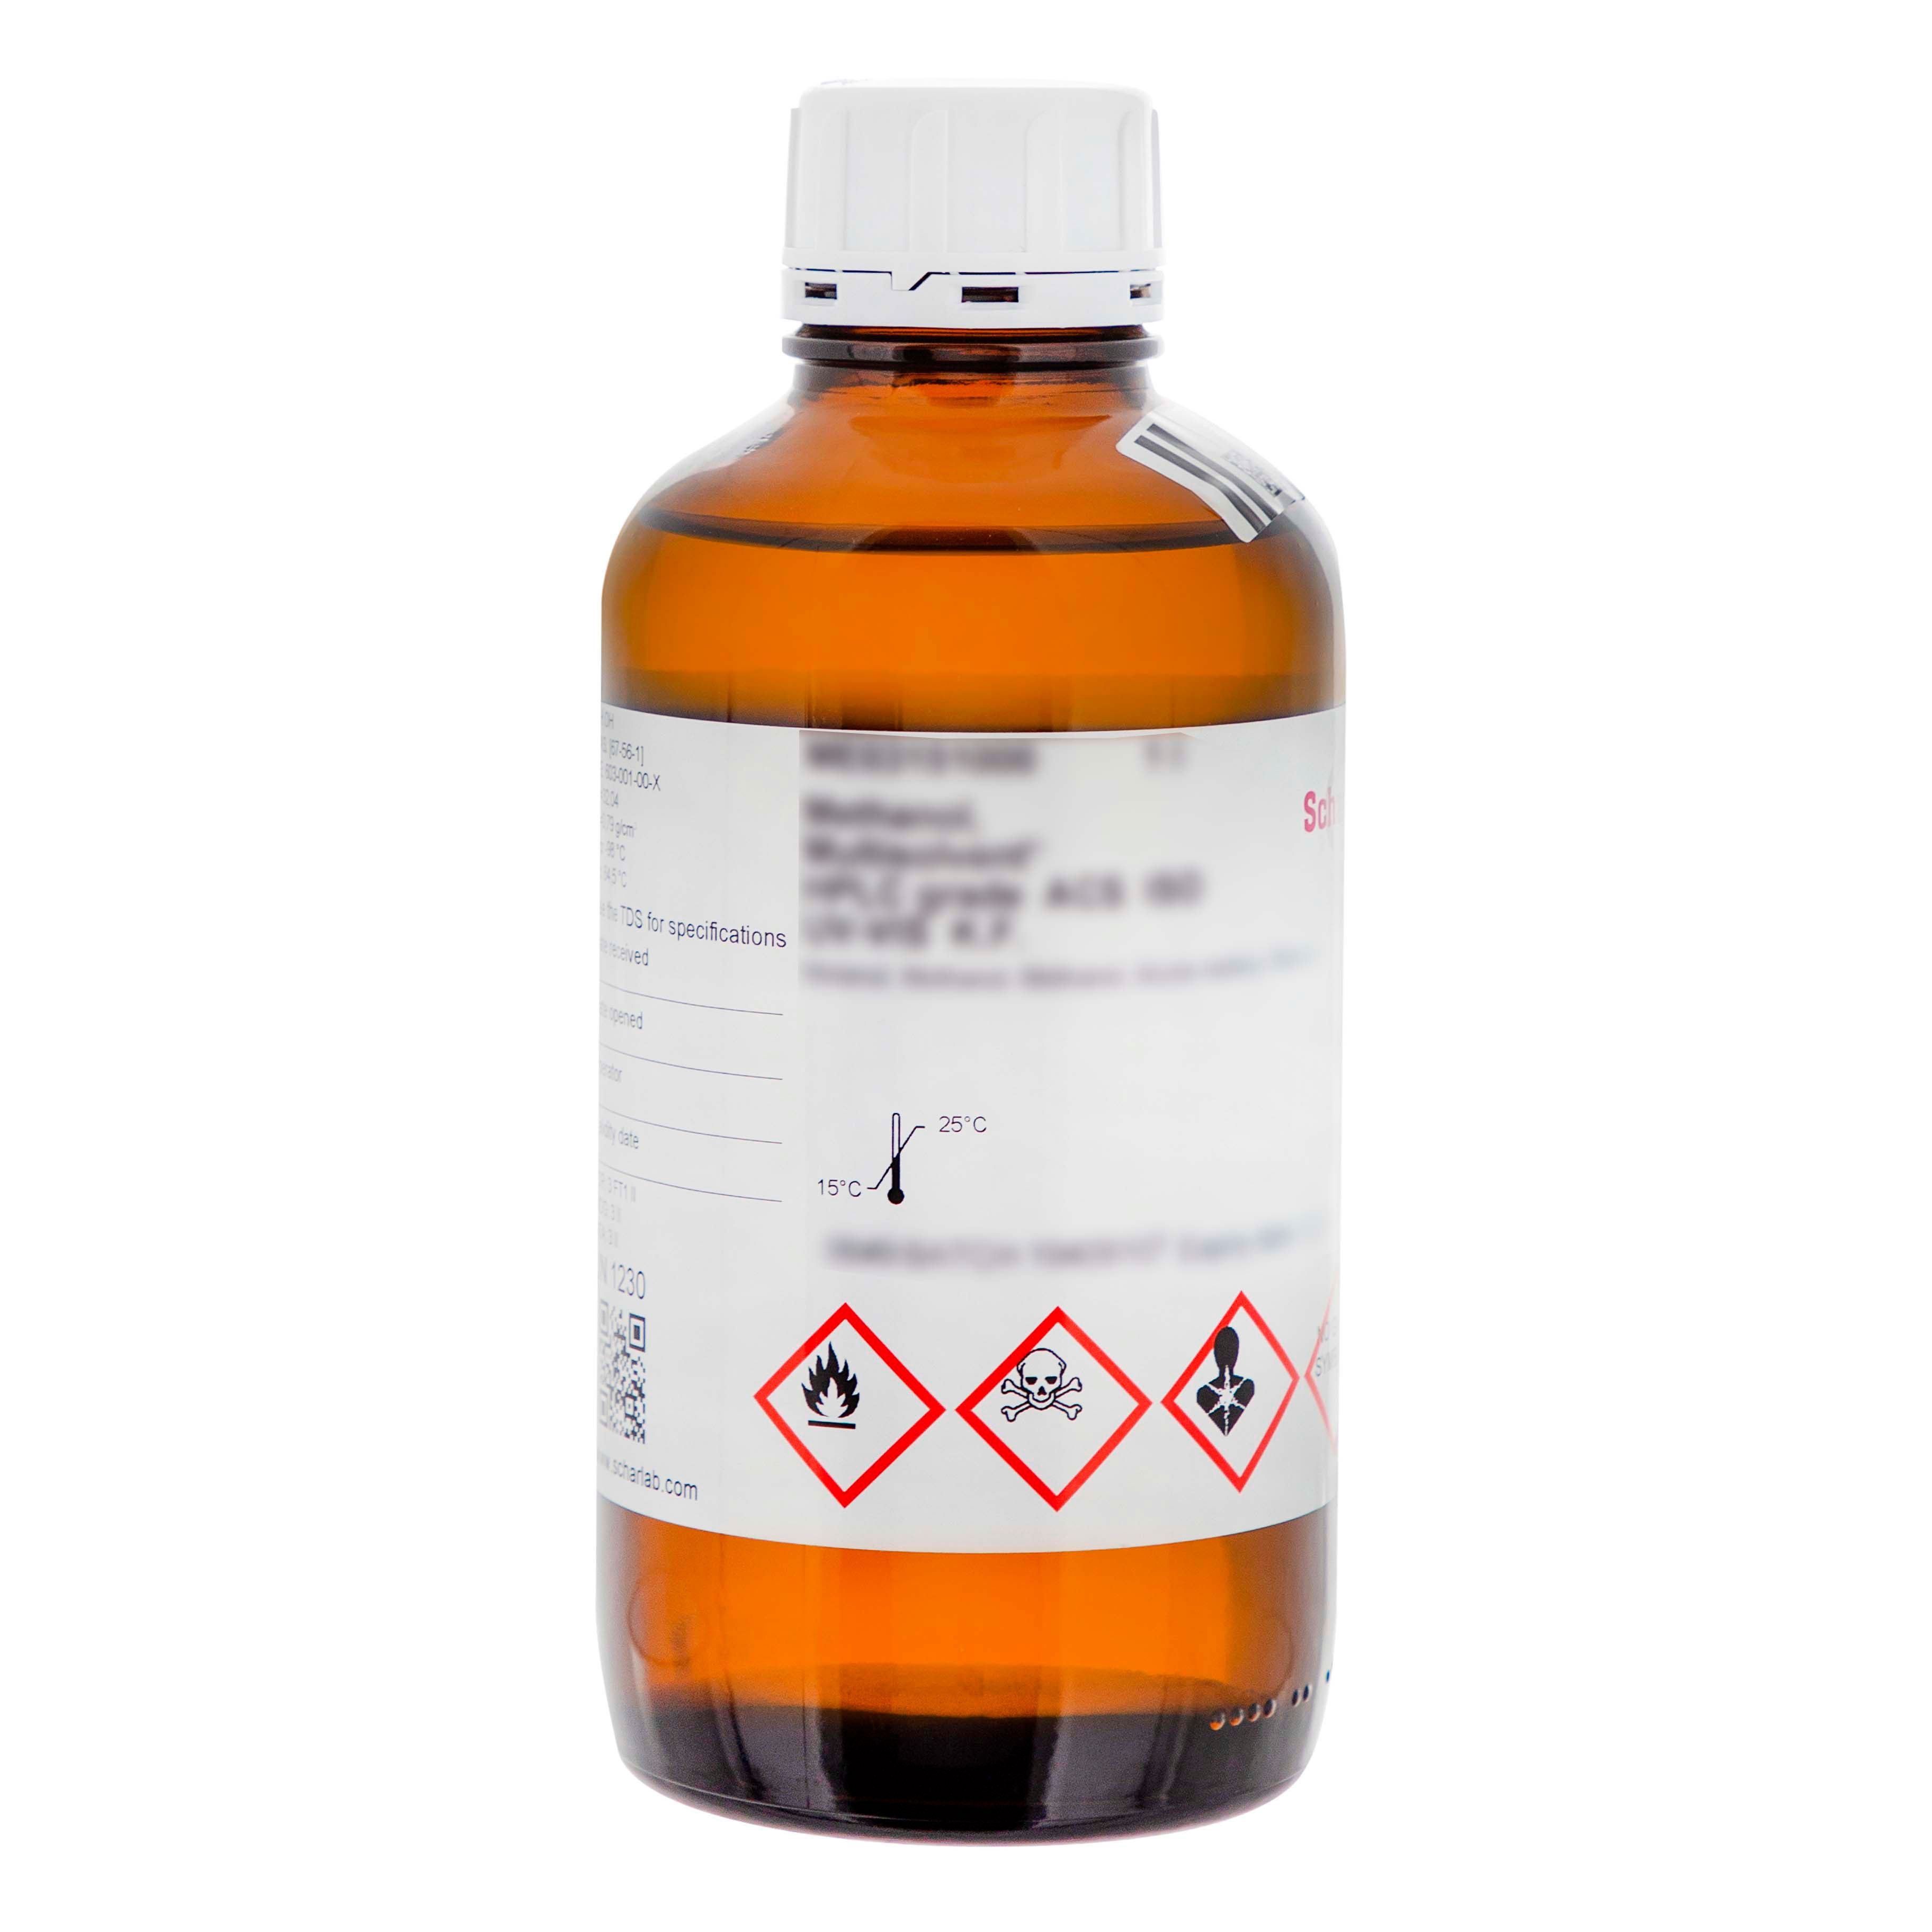 Acido borico, purissimo, Pharmpur®, Ph Eur, BP, NF - Scharlab